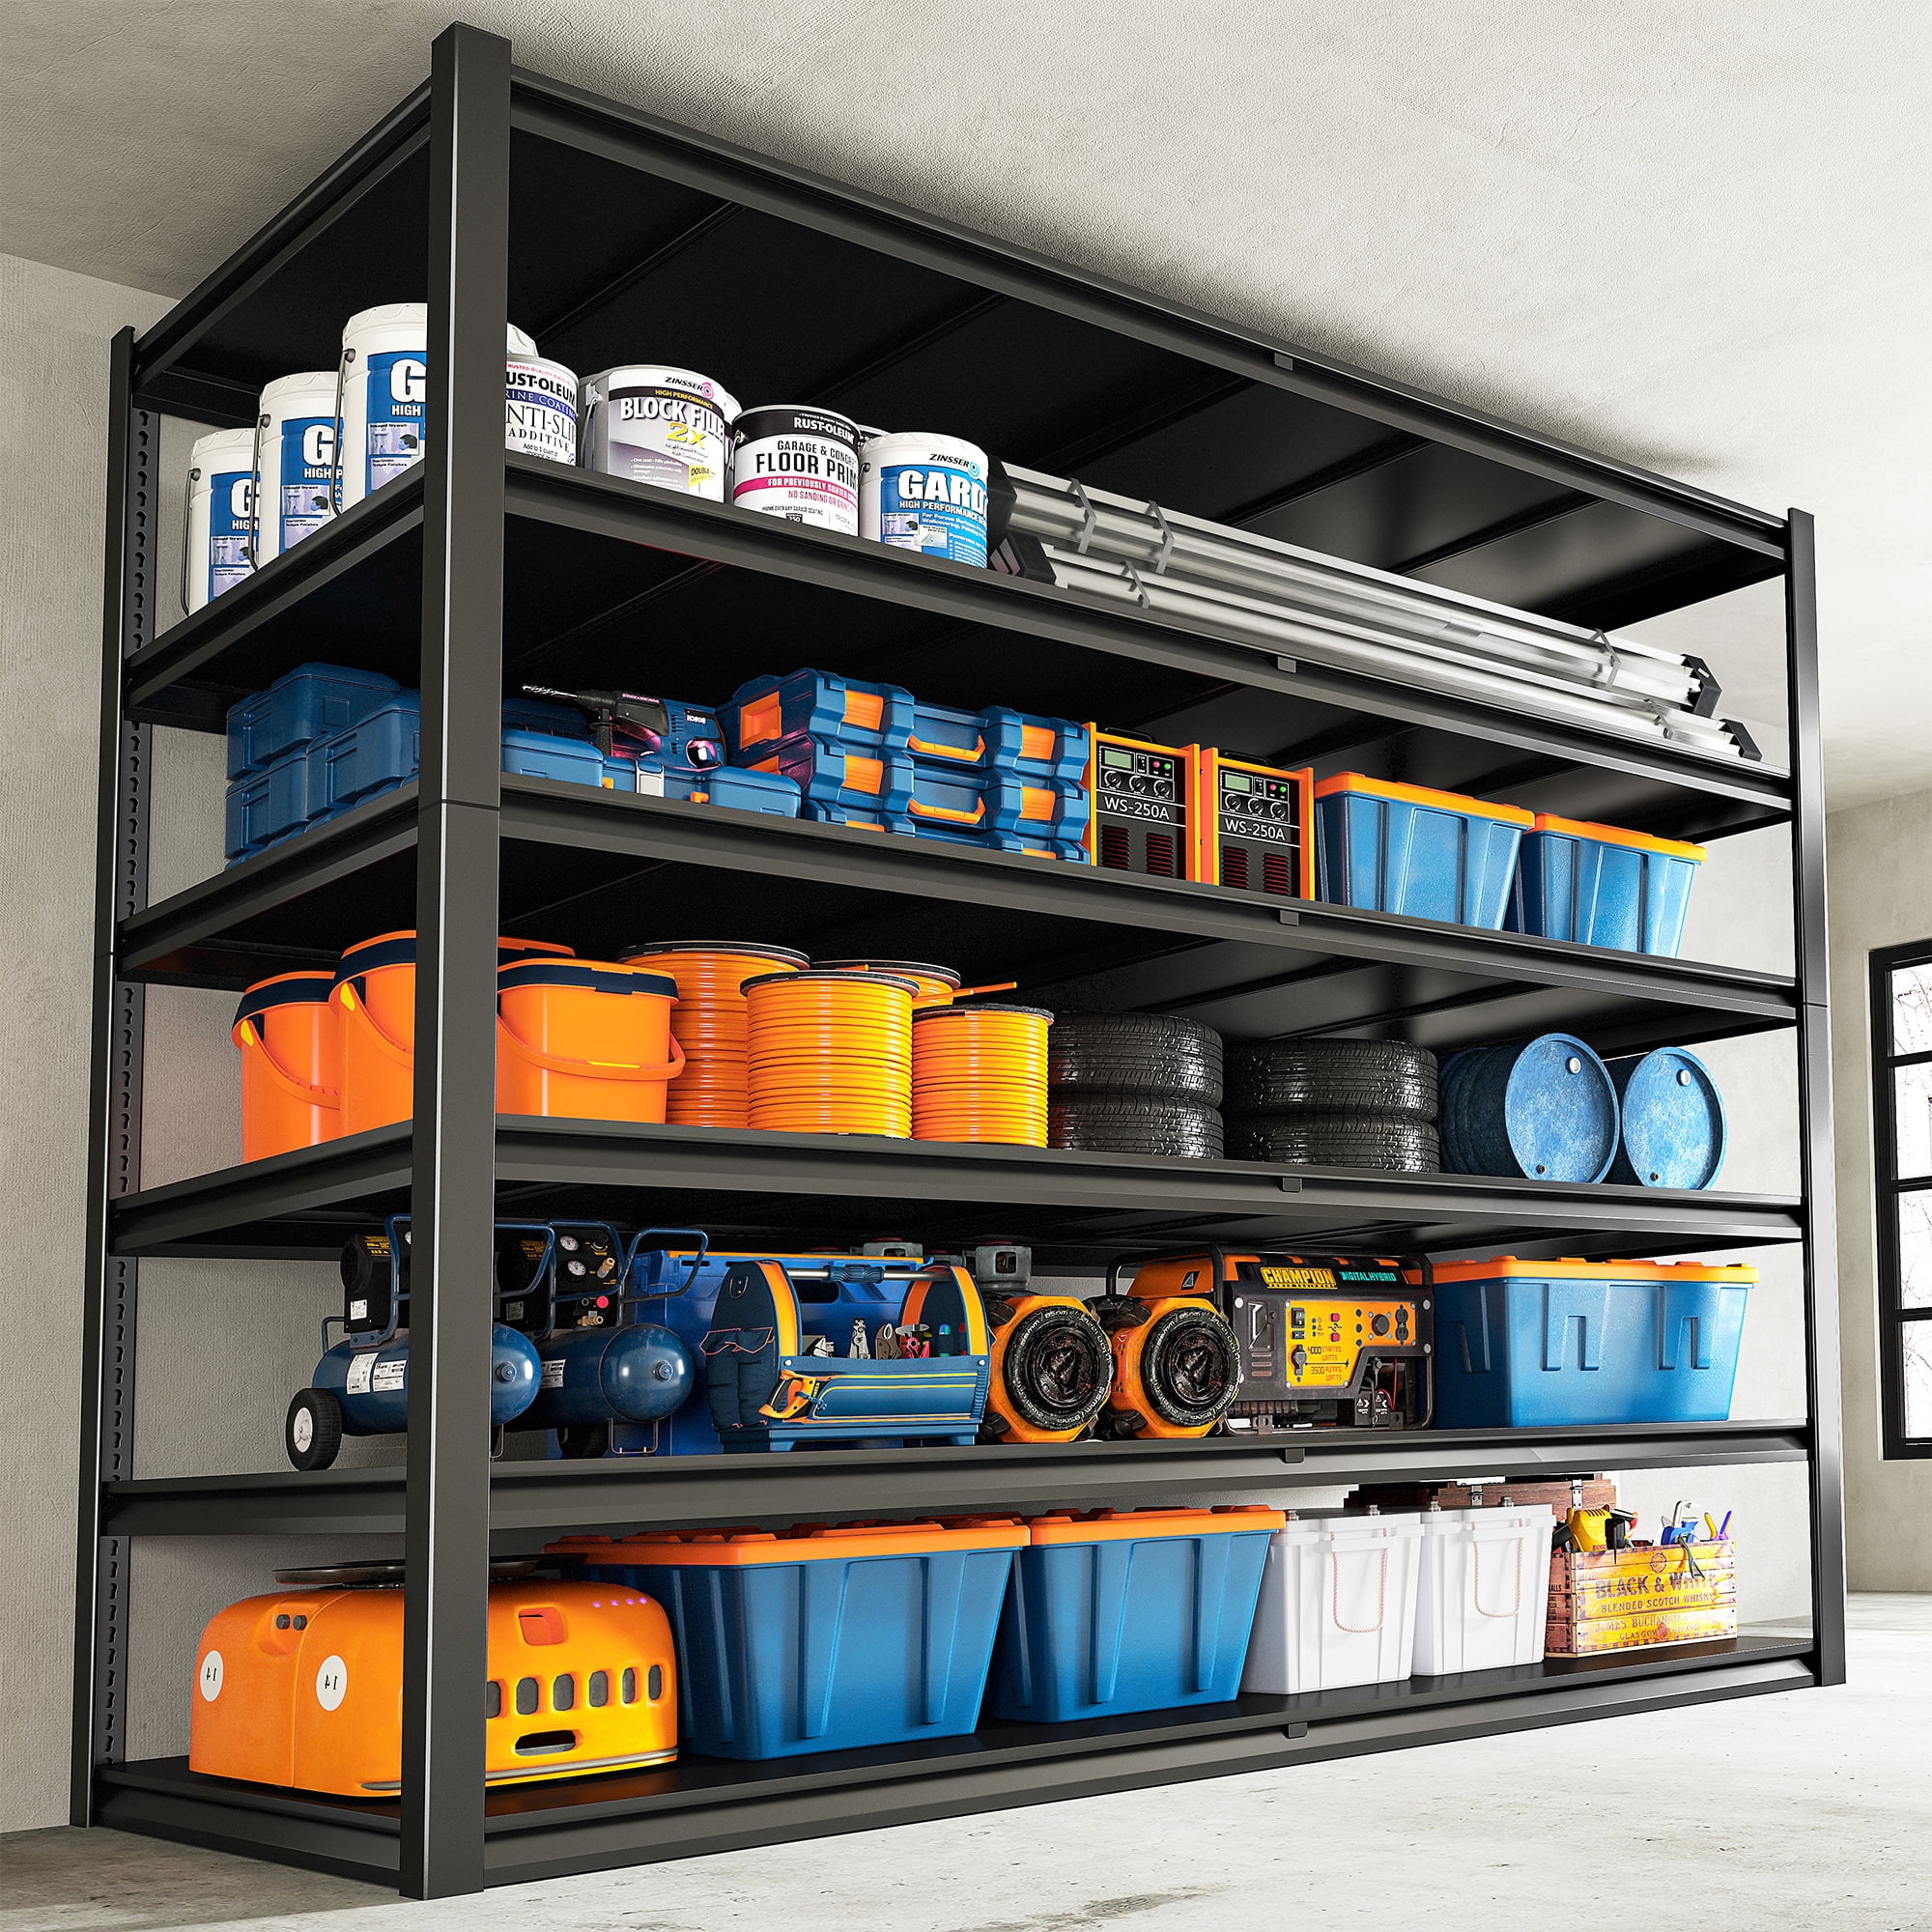 HDX 5-Tier Plastic Garage Storage Shelving Unit in Gray (36 in. W